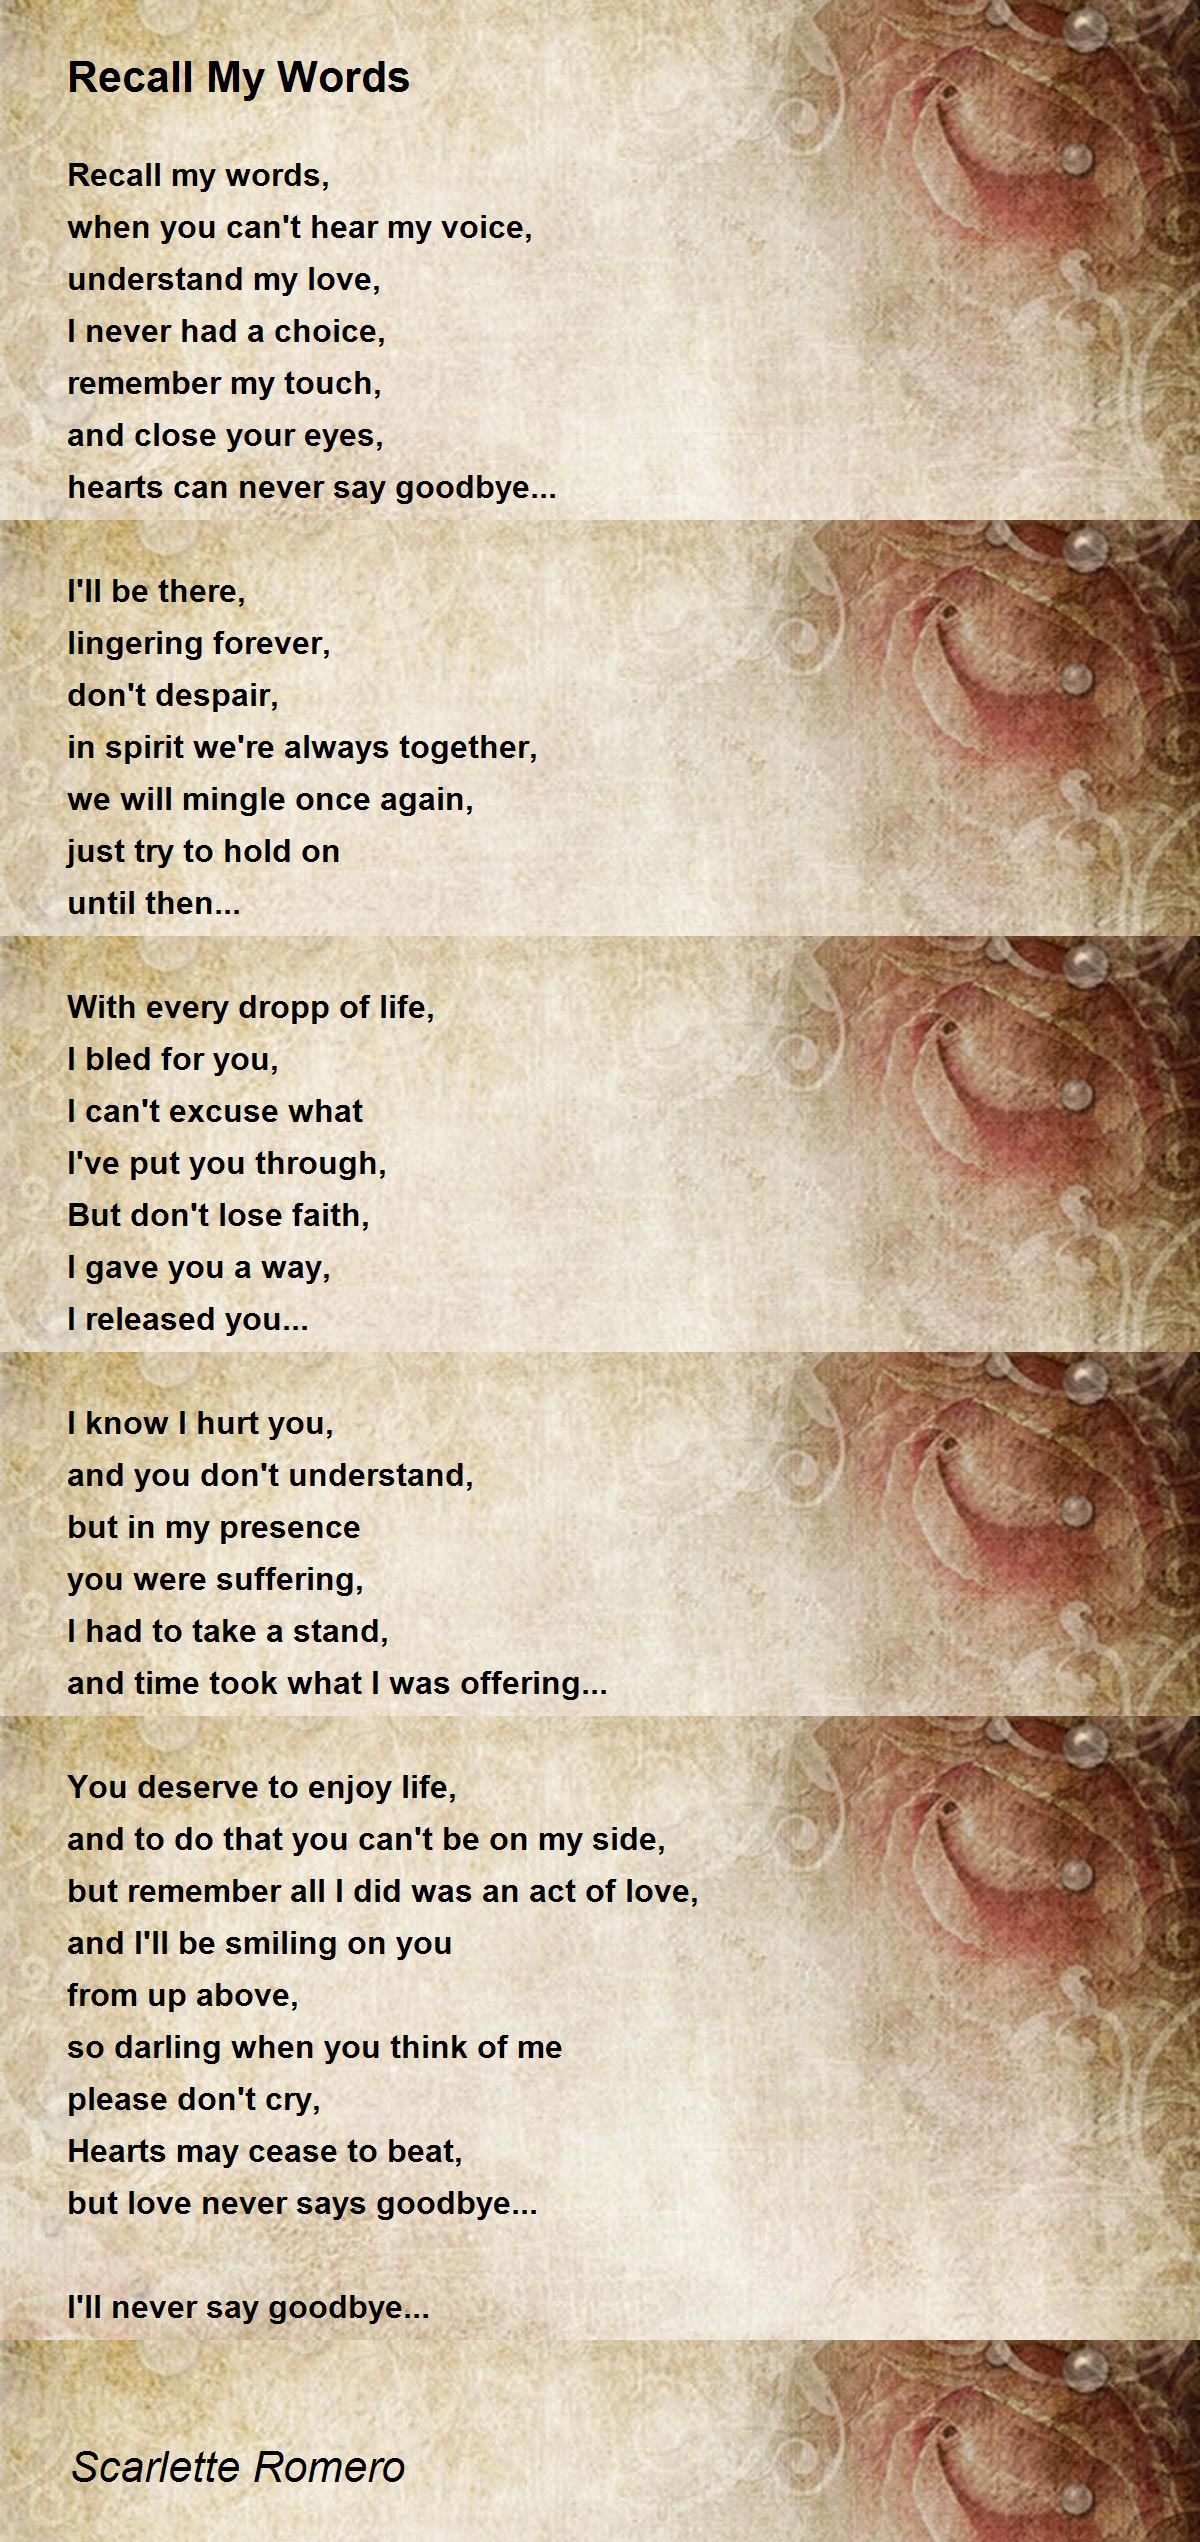 Recall My Words - Recall My Words Poem by Scarlette Romero